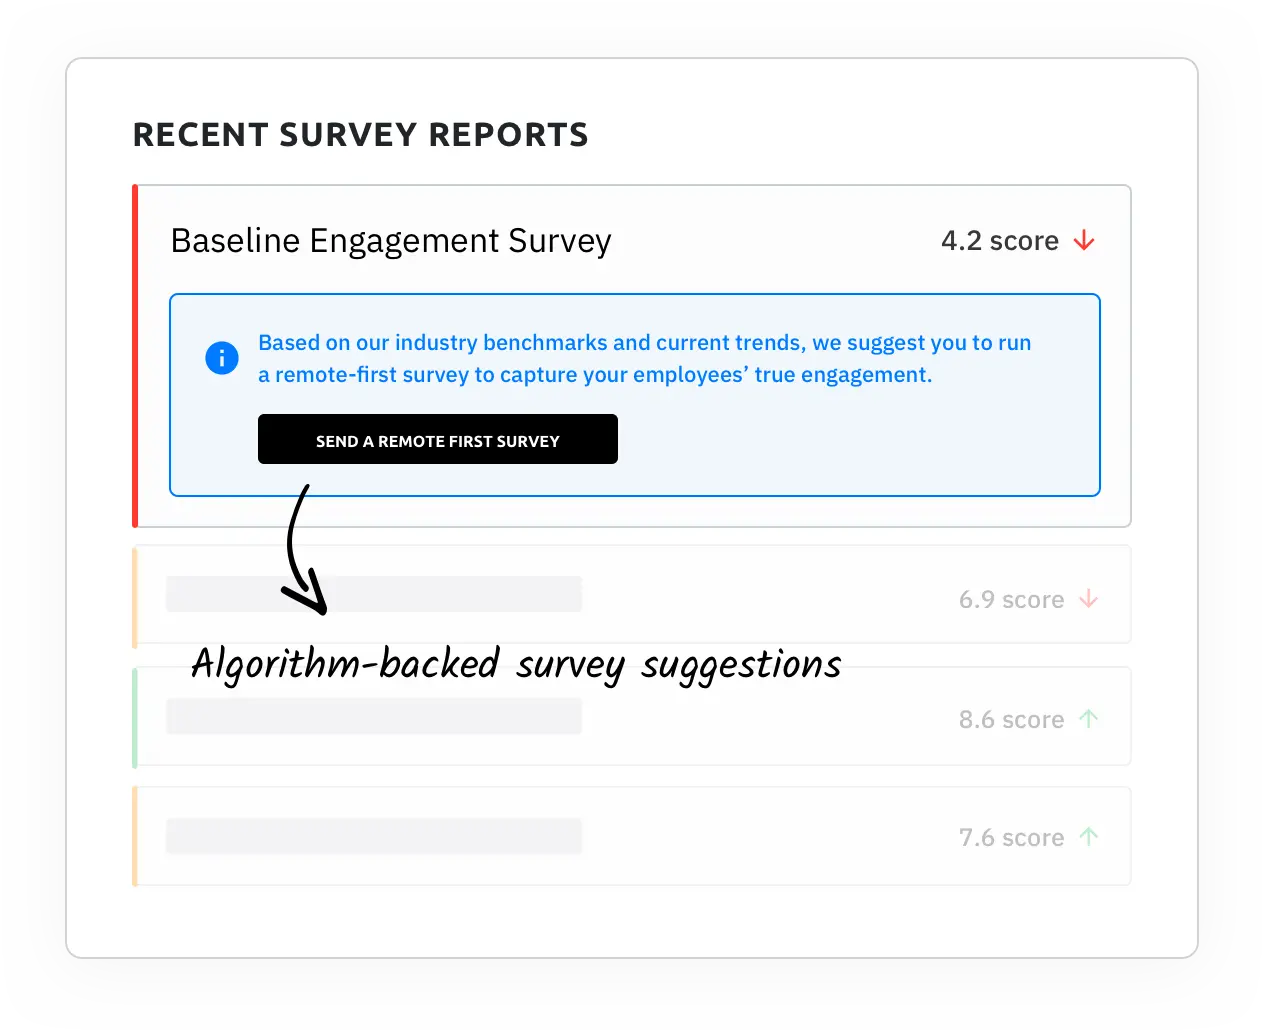 Data backed survey suggestions within the employee engagement platform